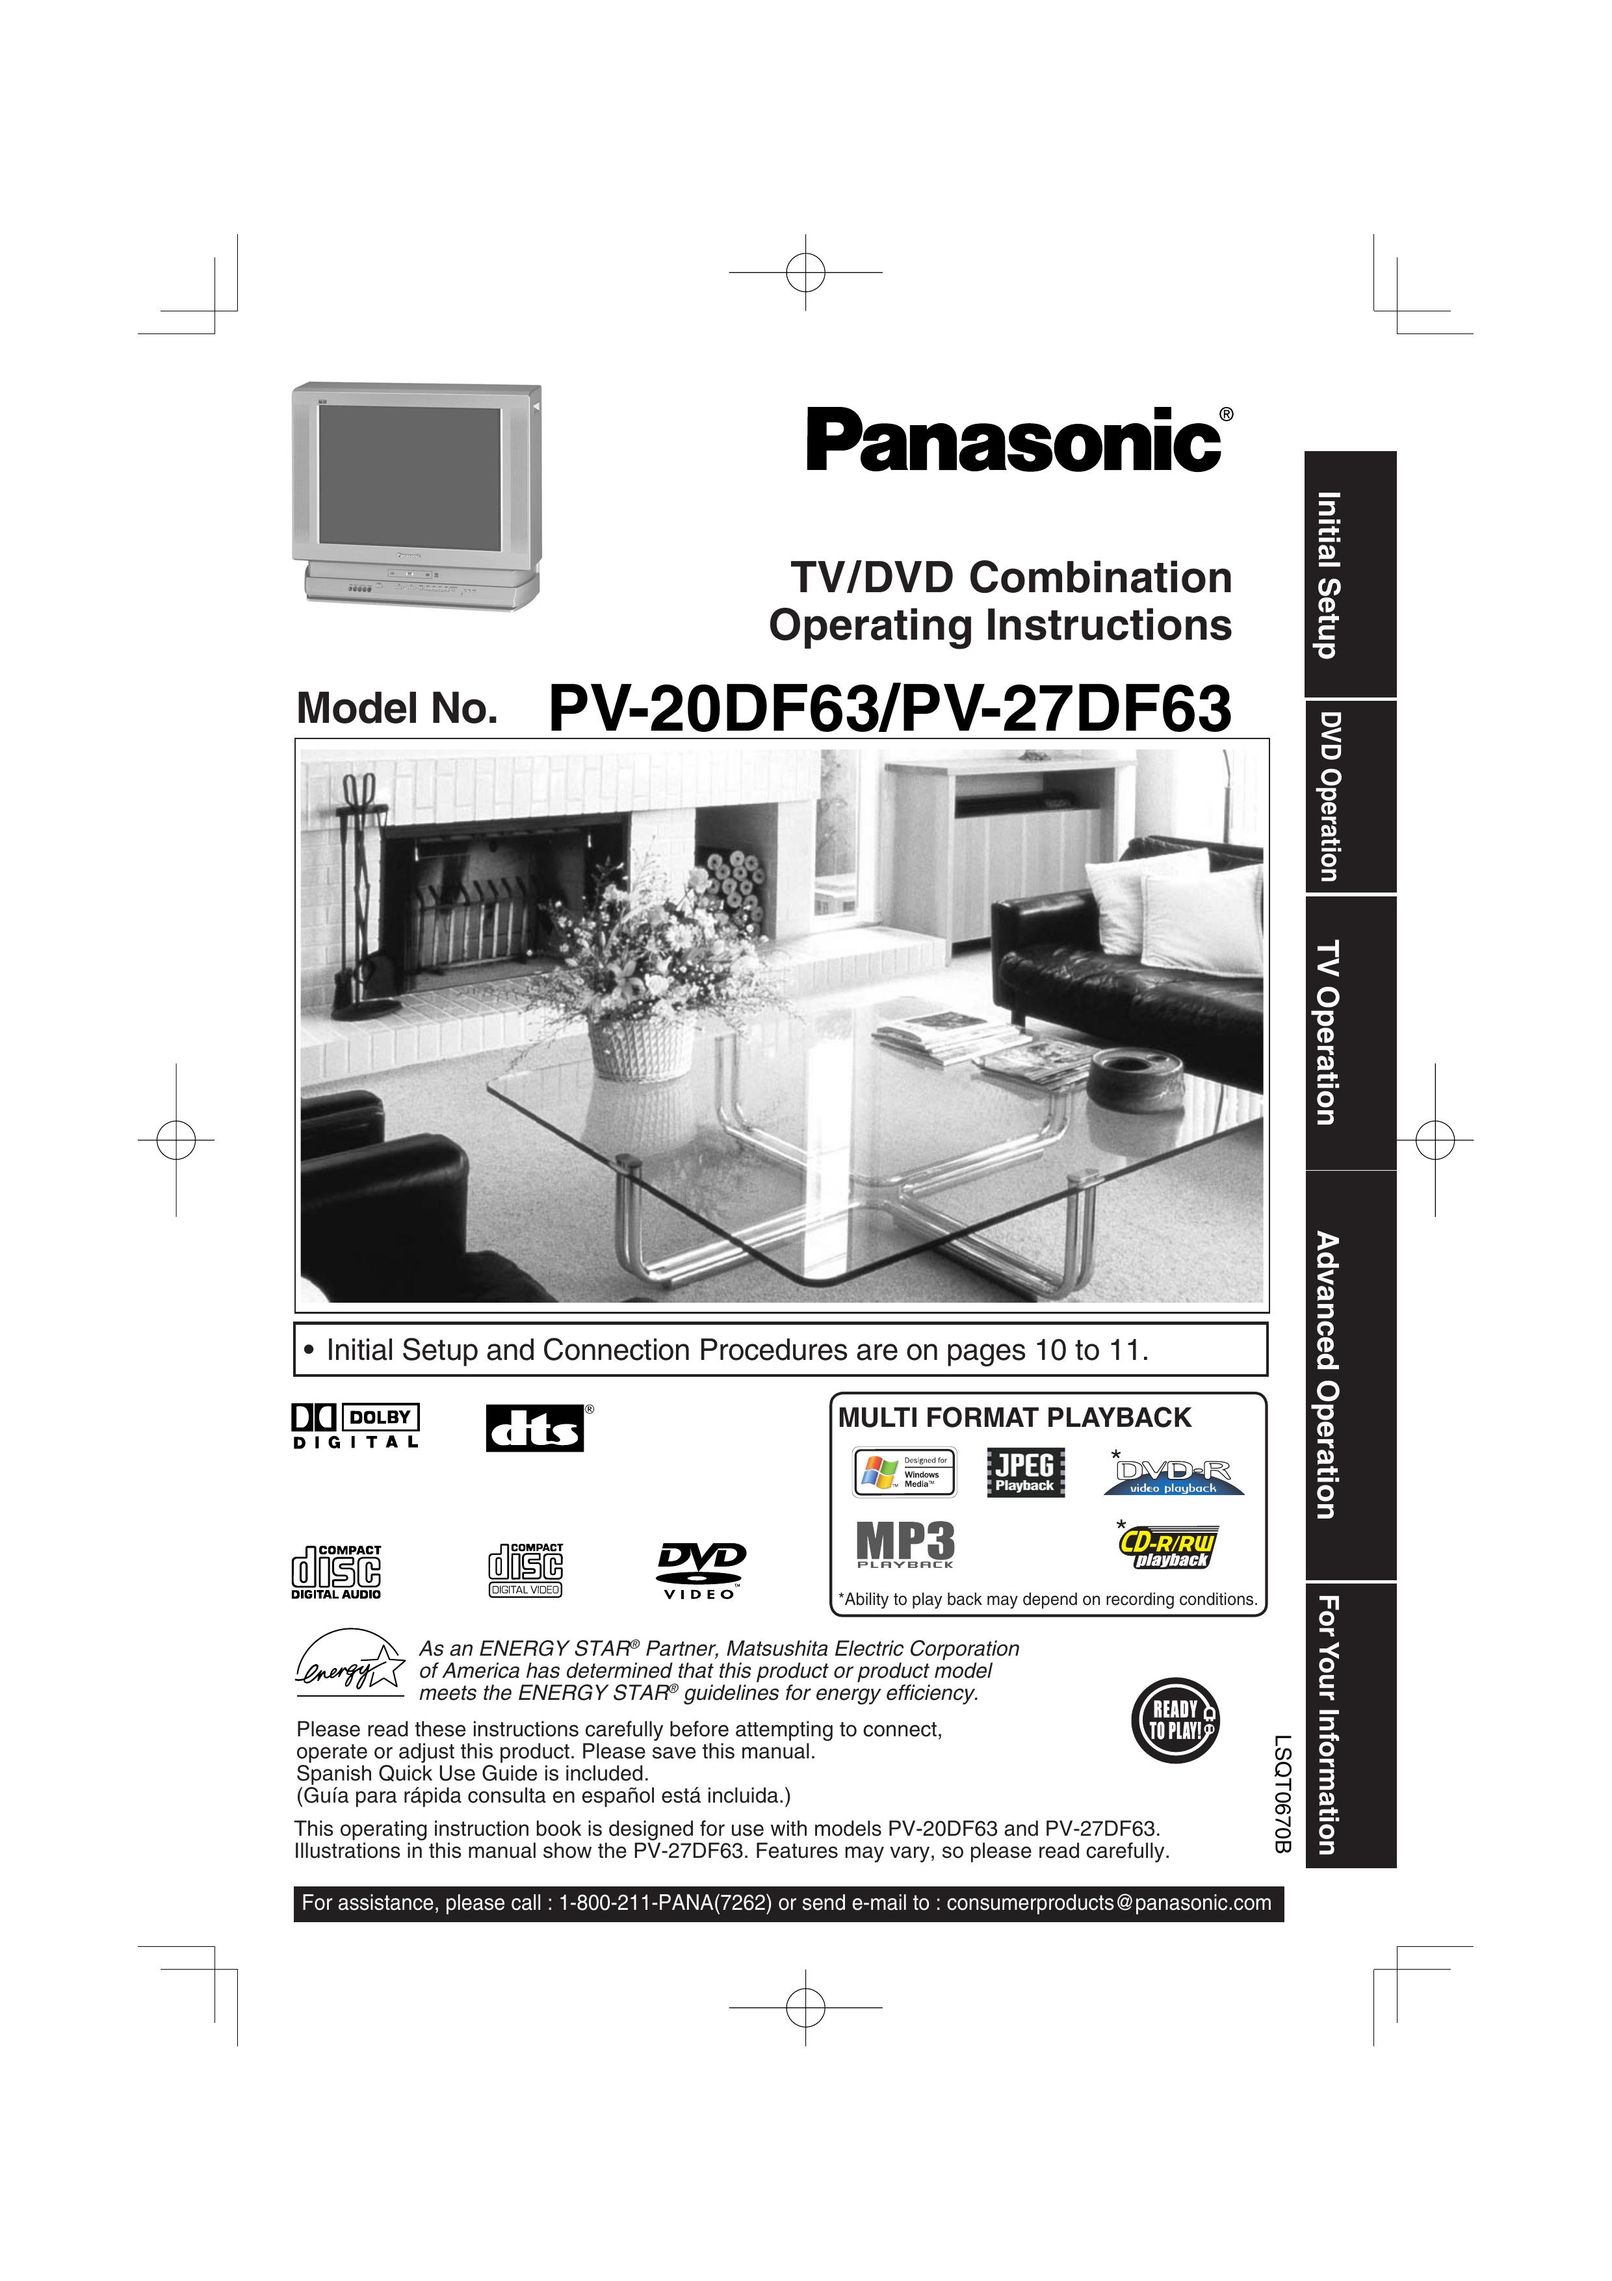 Panasonic PV 20DF63 TV DVD Combo User Manual